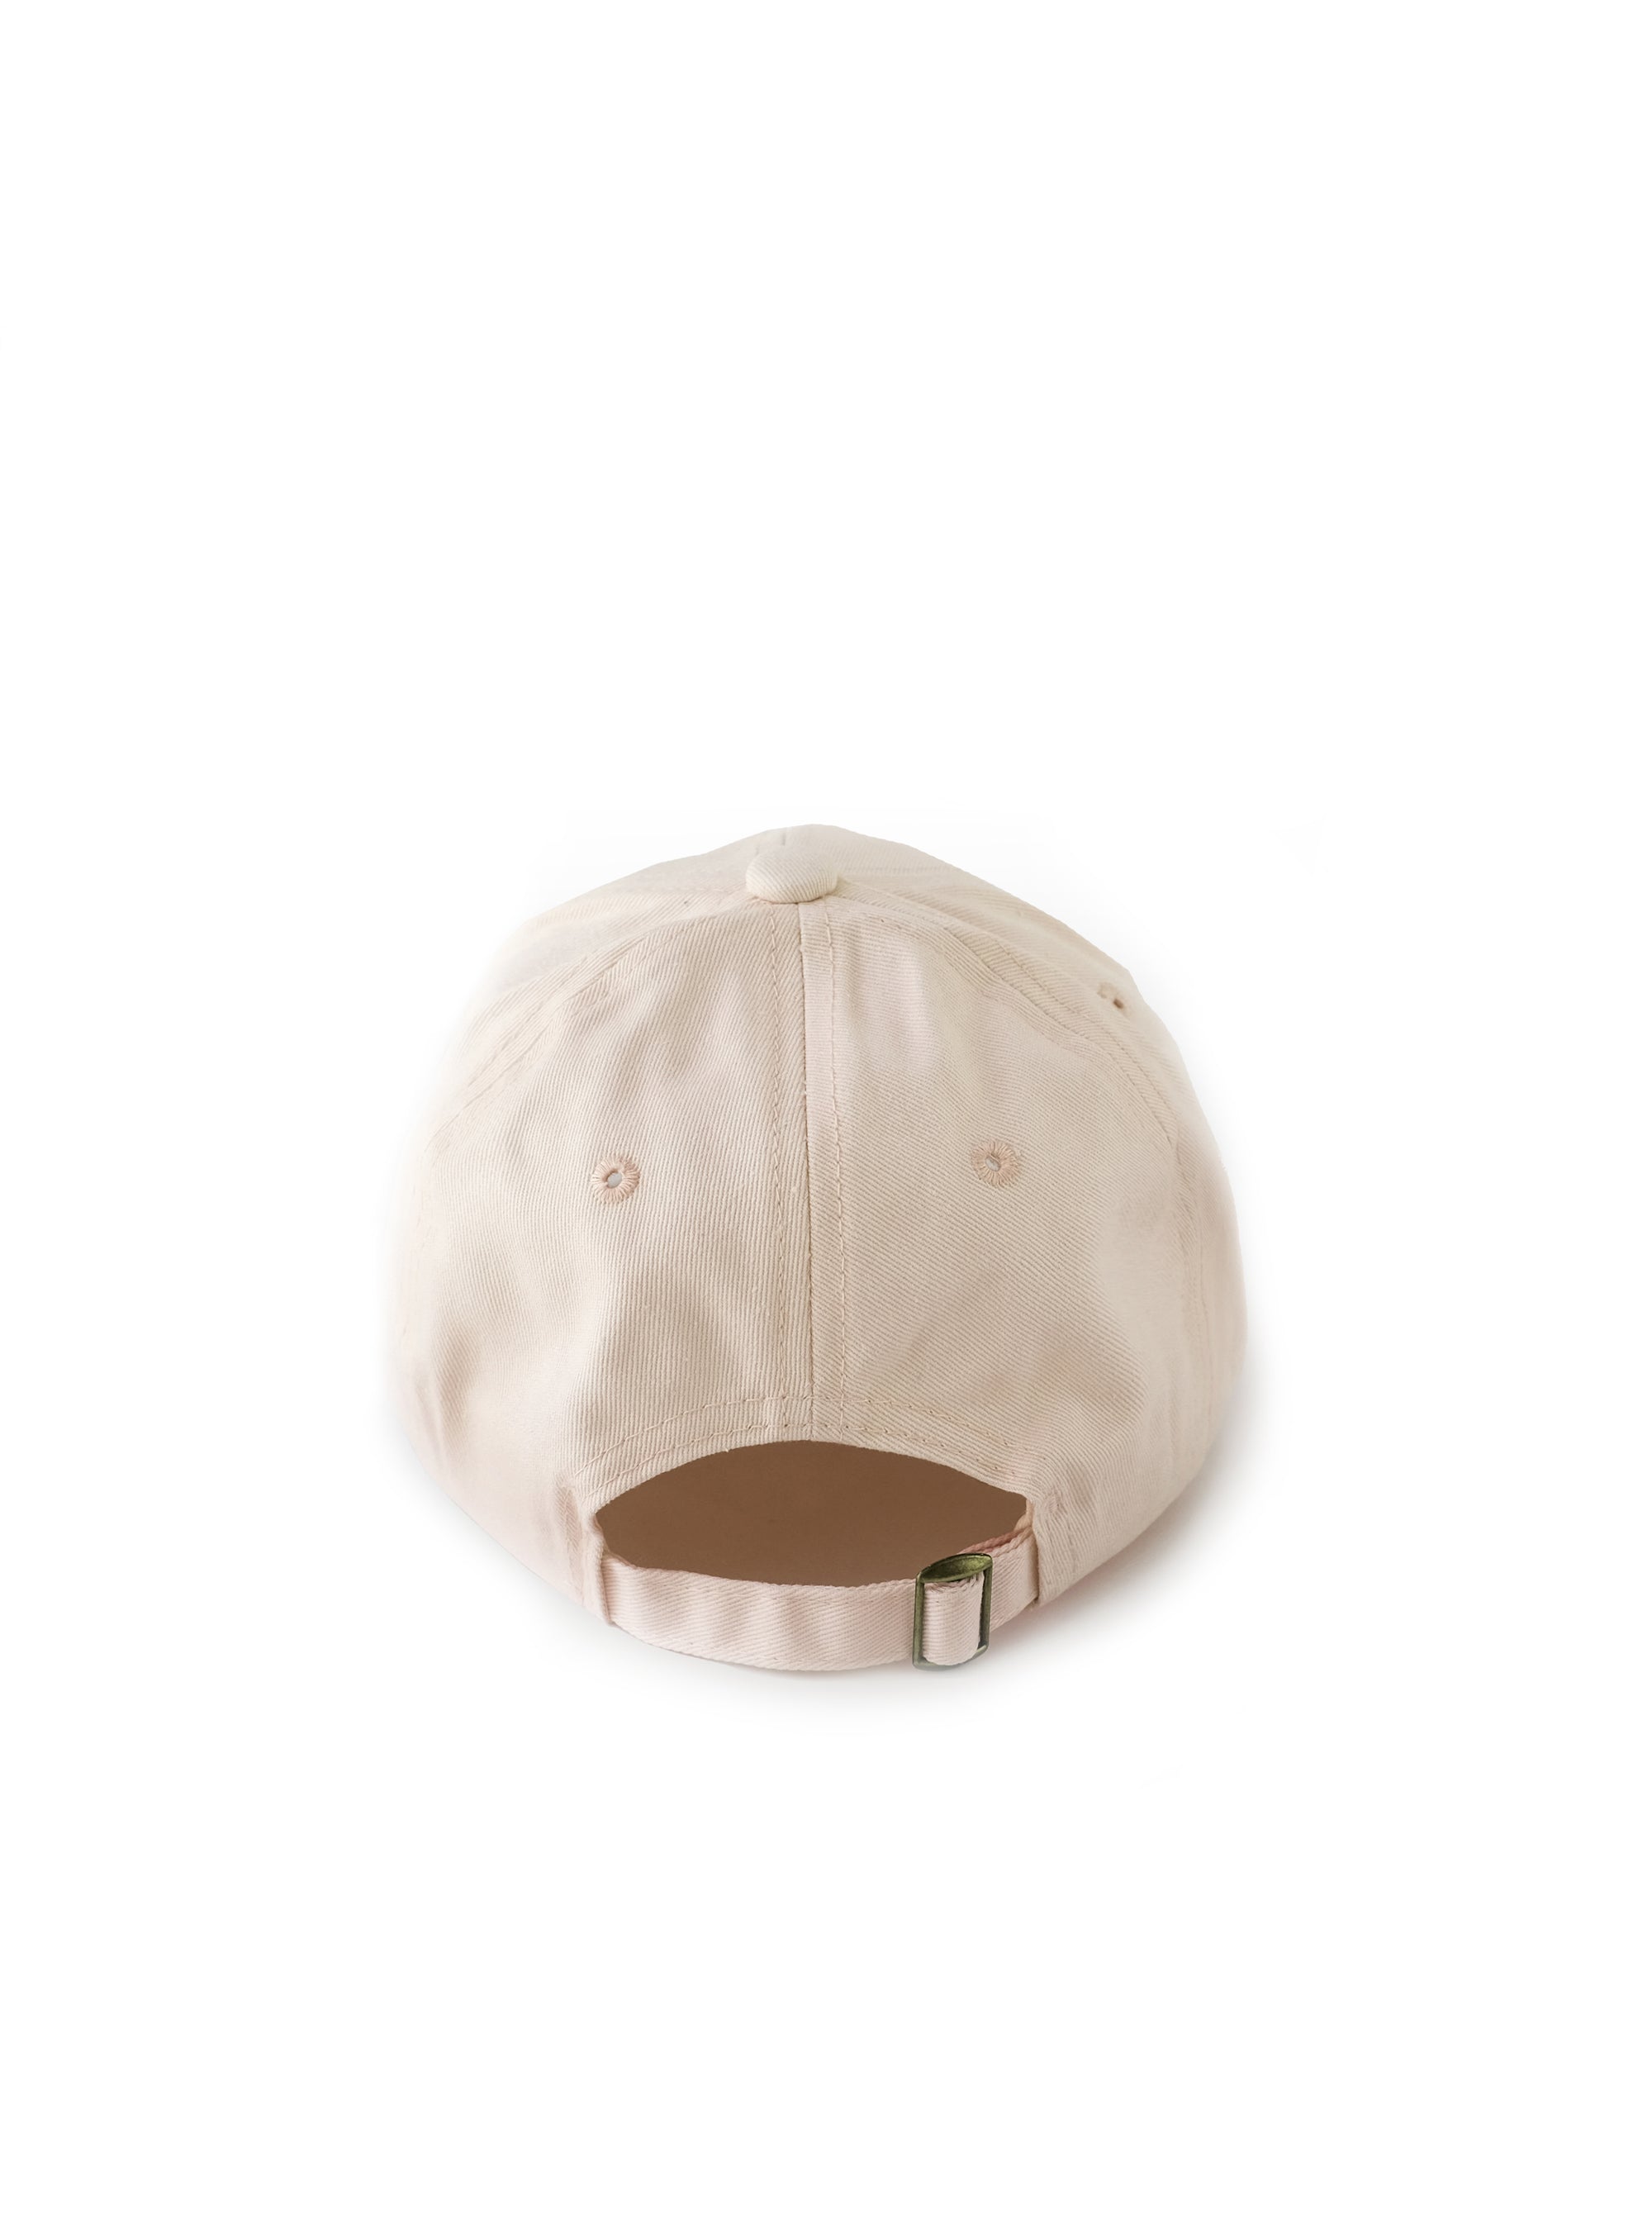 buttermilk cap with adjustable strap